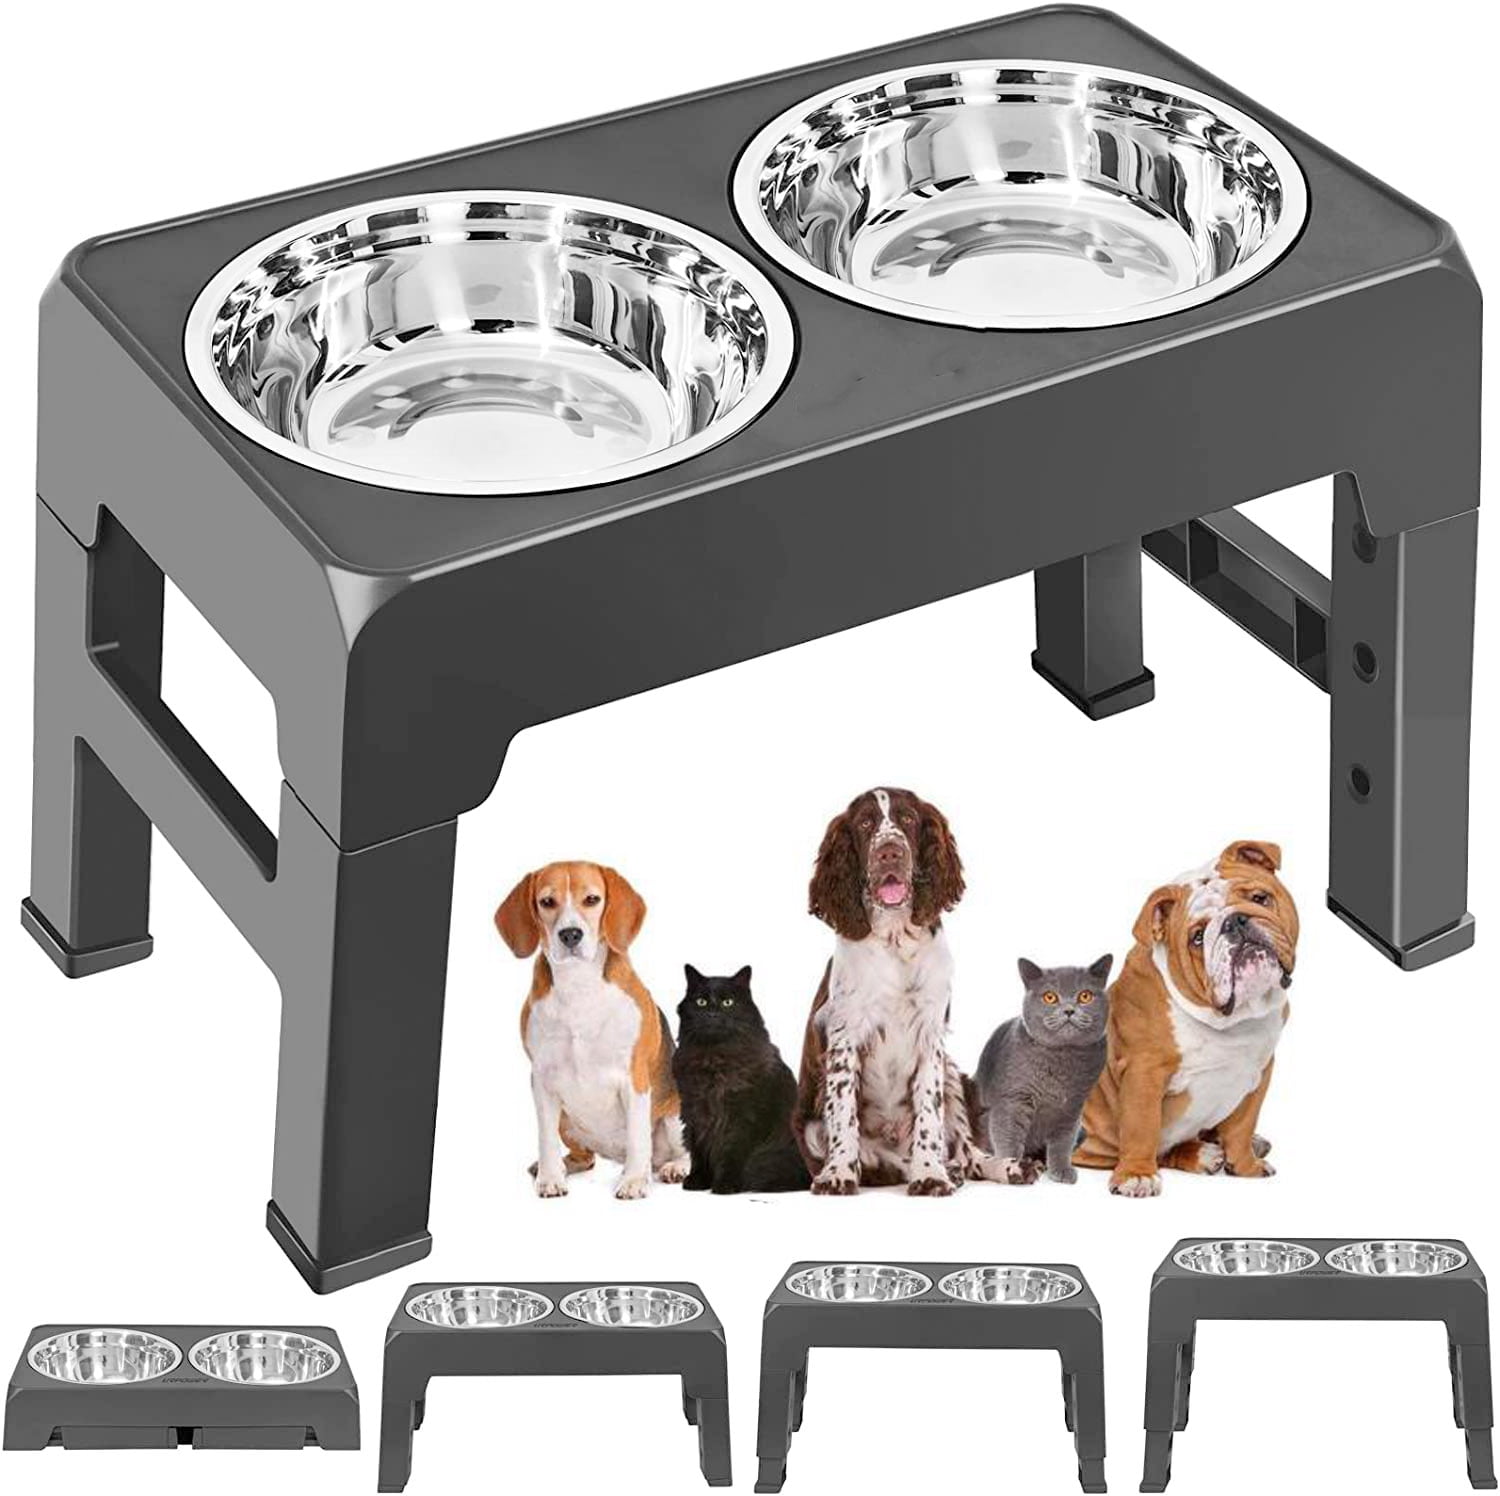 Raised Dog Food Bowls - sporting goods - by owner - sale - craigslist